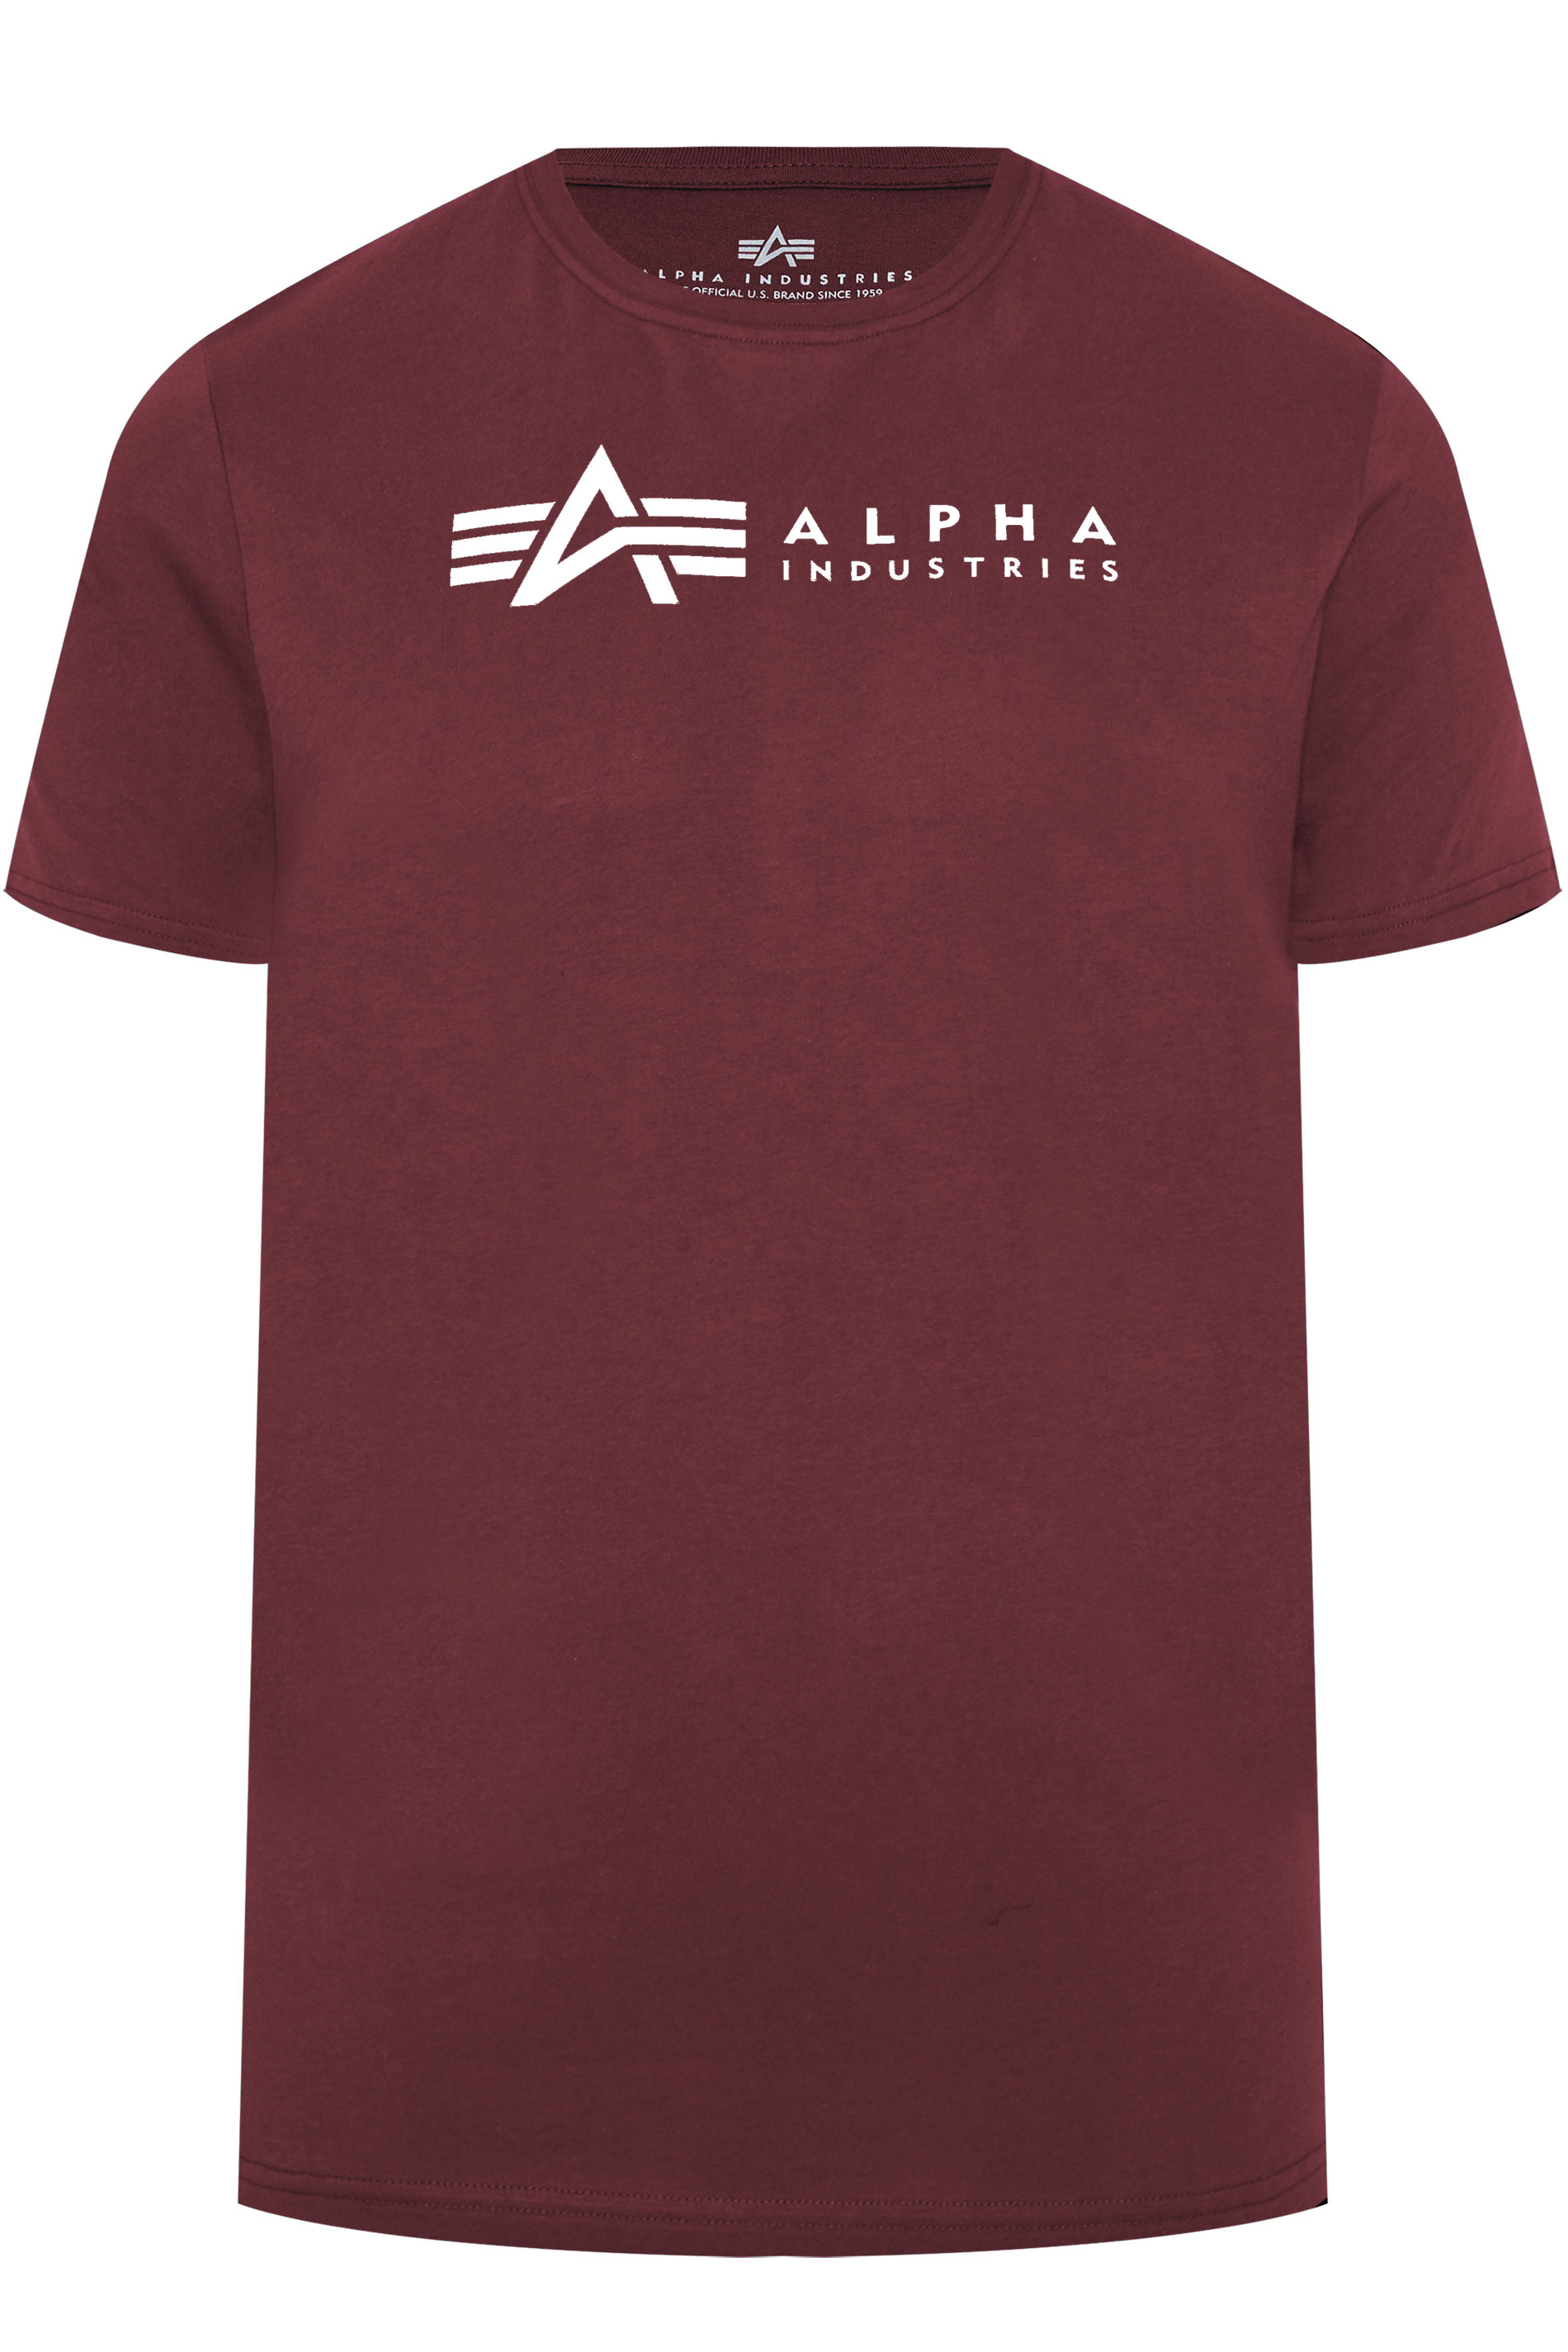 Red 2 INDUSTRIES T-Shirts BadRhino ALPHA Logo Pack Burgundy |